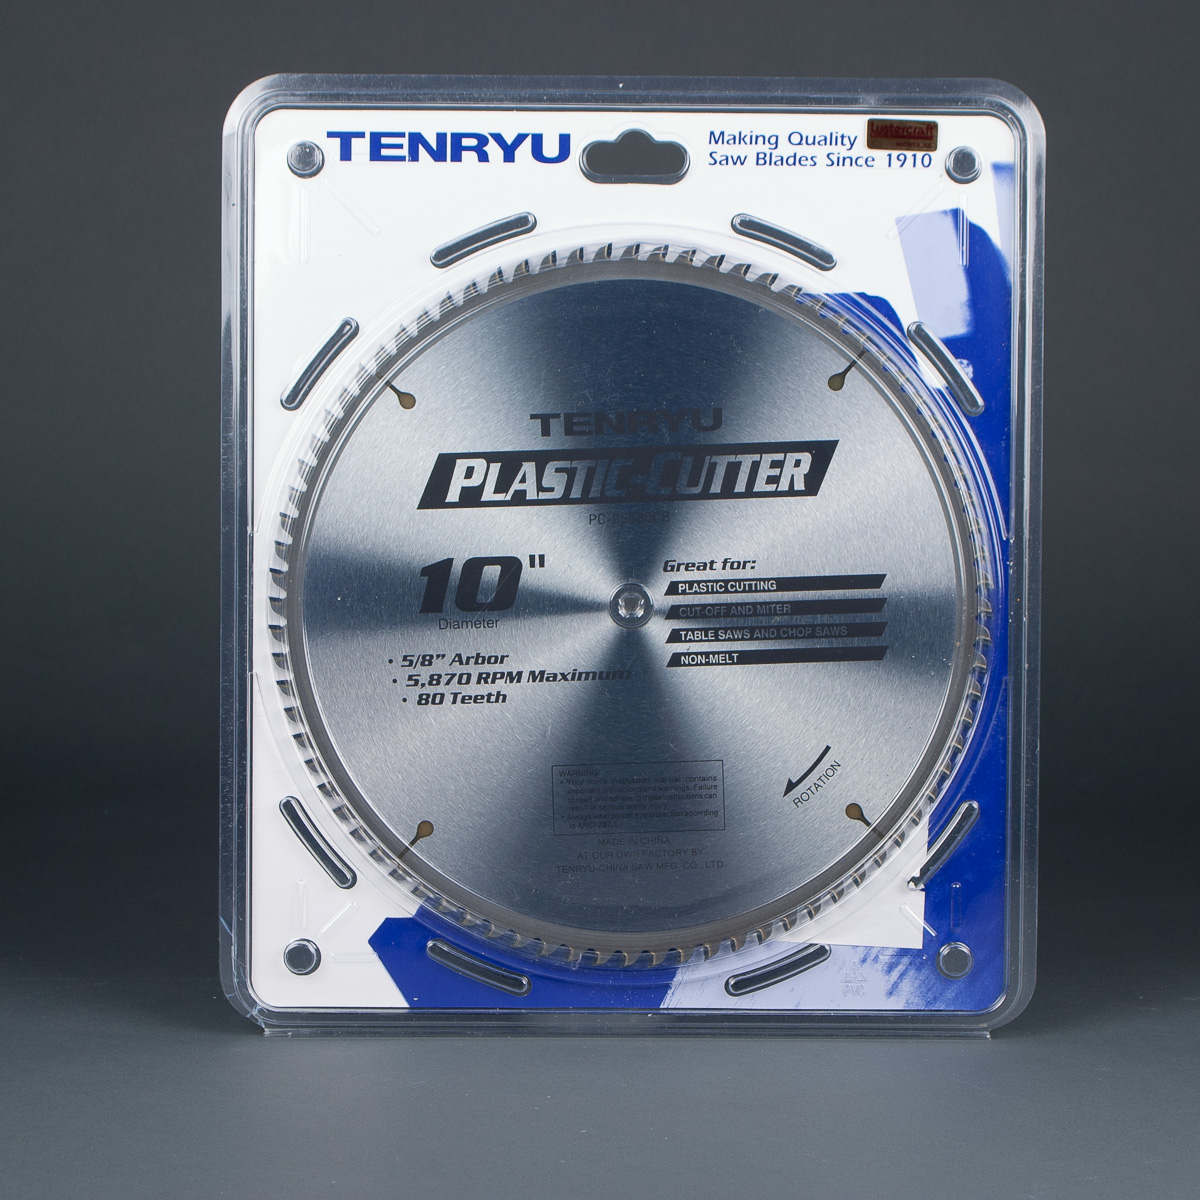 Tenryu PC-25580CB 10 Plastic Cutter Saw Blade 80T 5/8